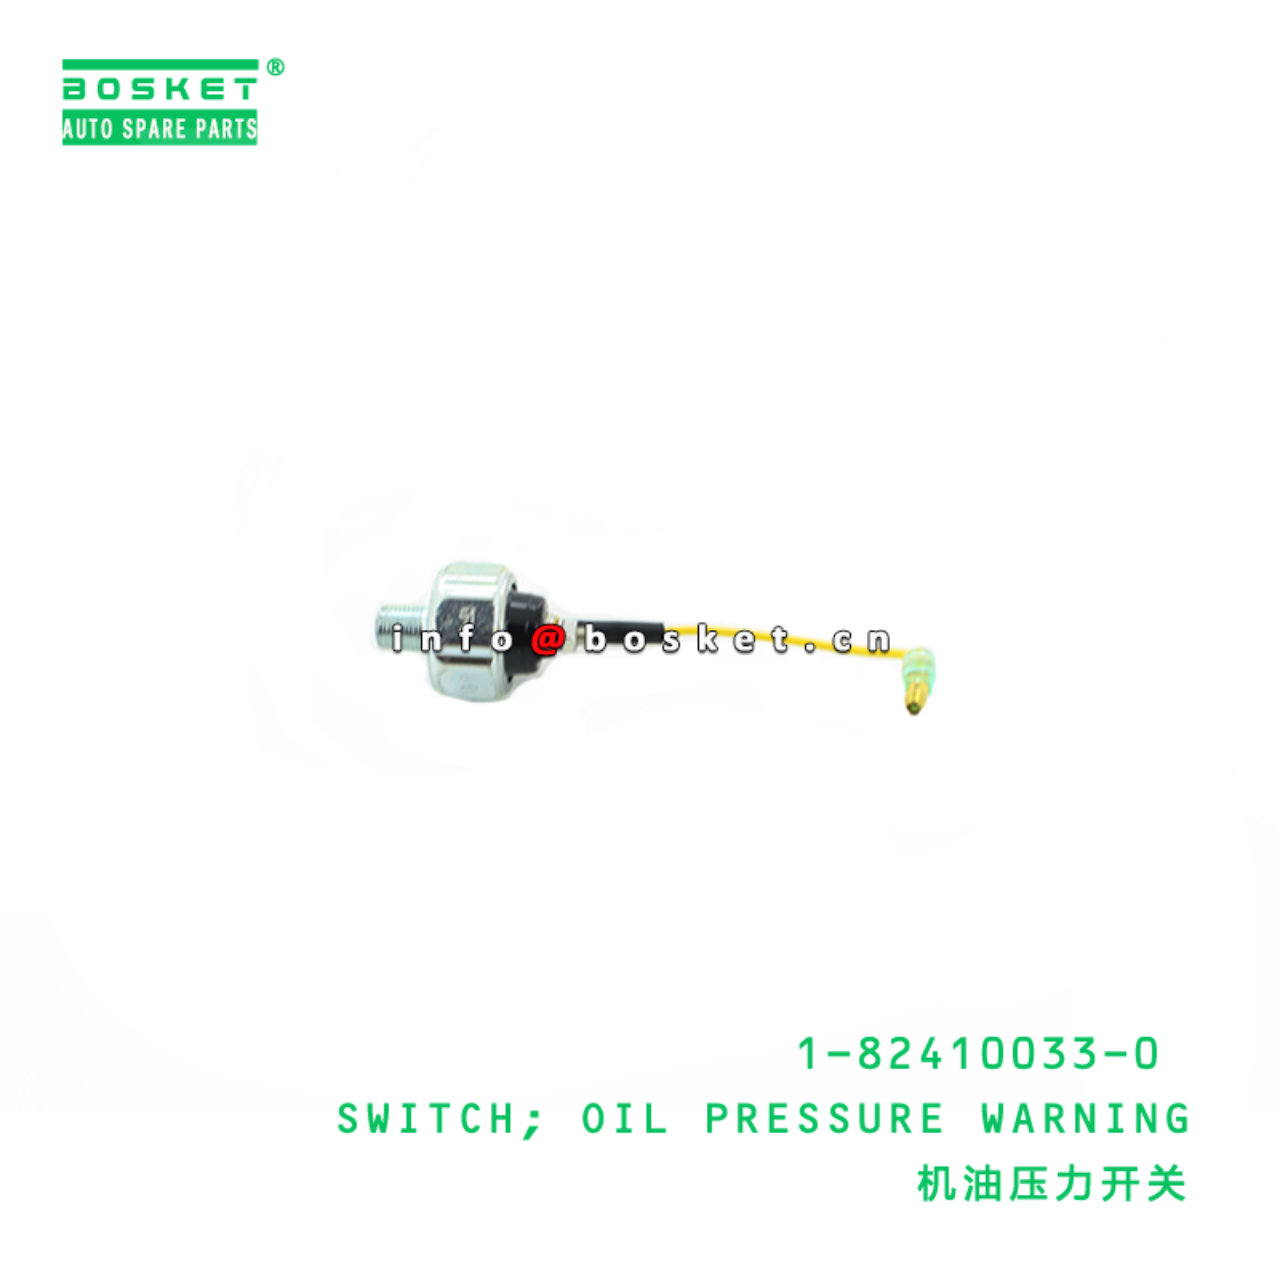  1-82410033-0 Oil Pressure Warning Switch 1824100330 Suitable for ISUZU C240 4JG1 